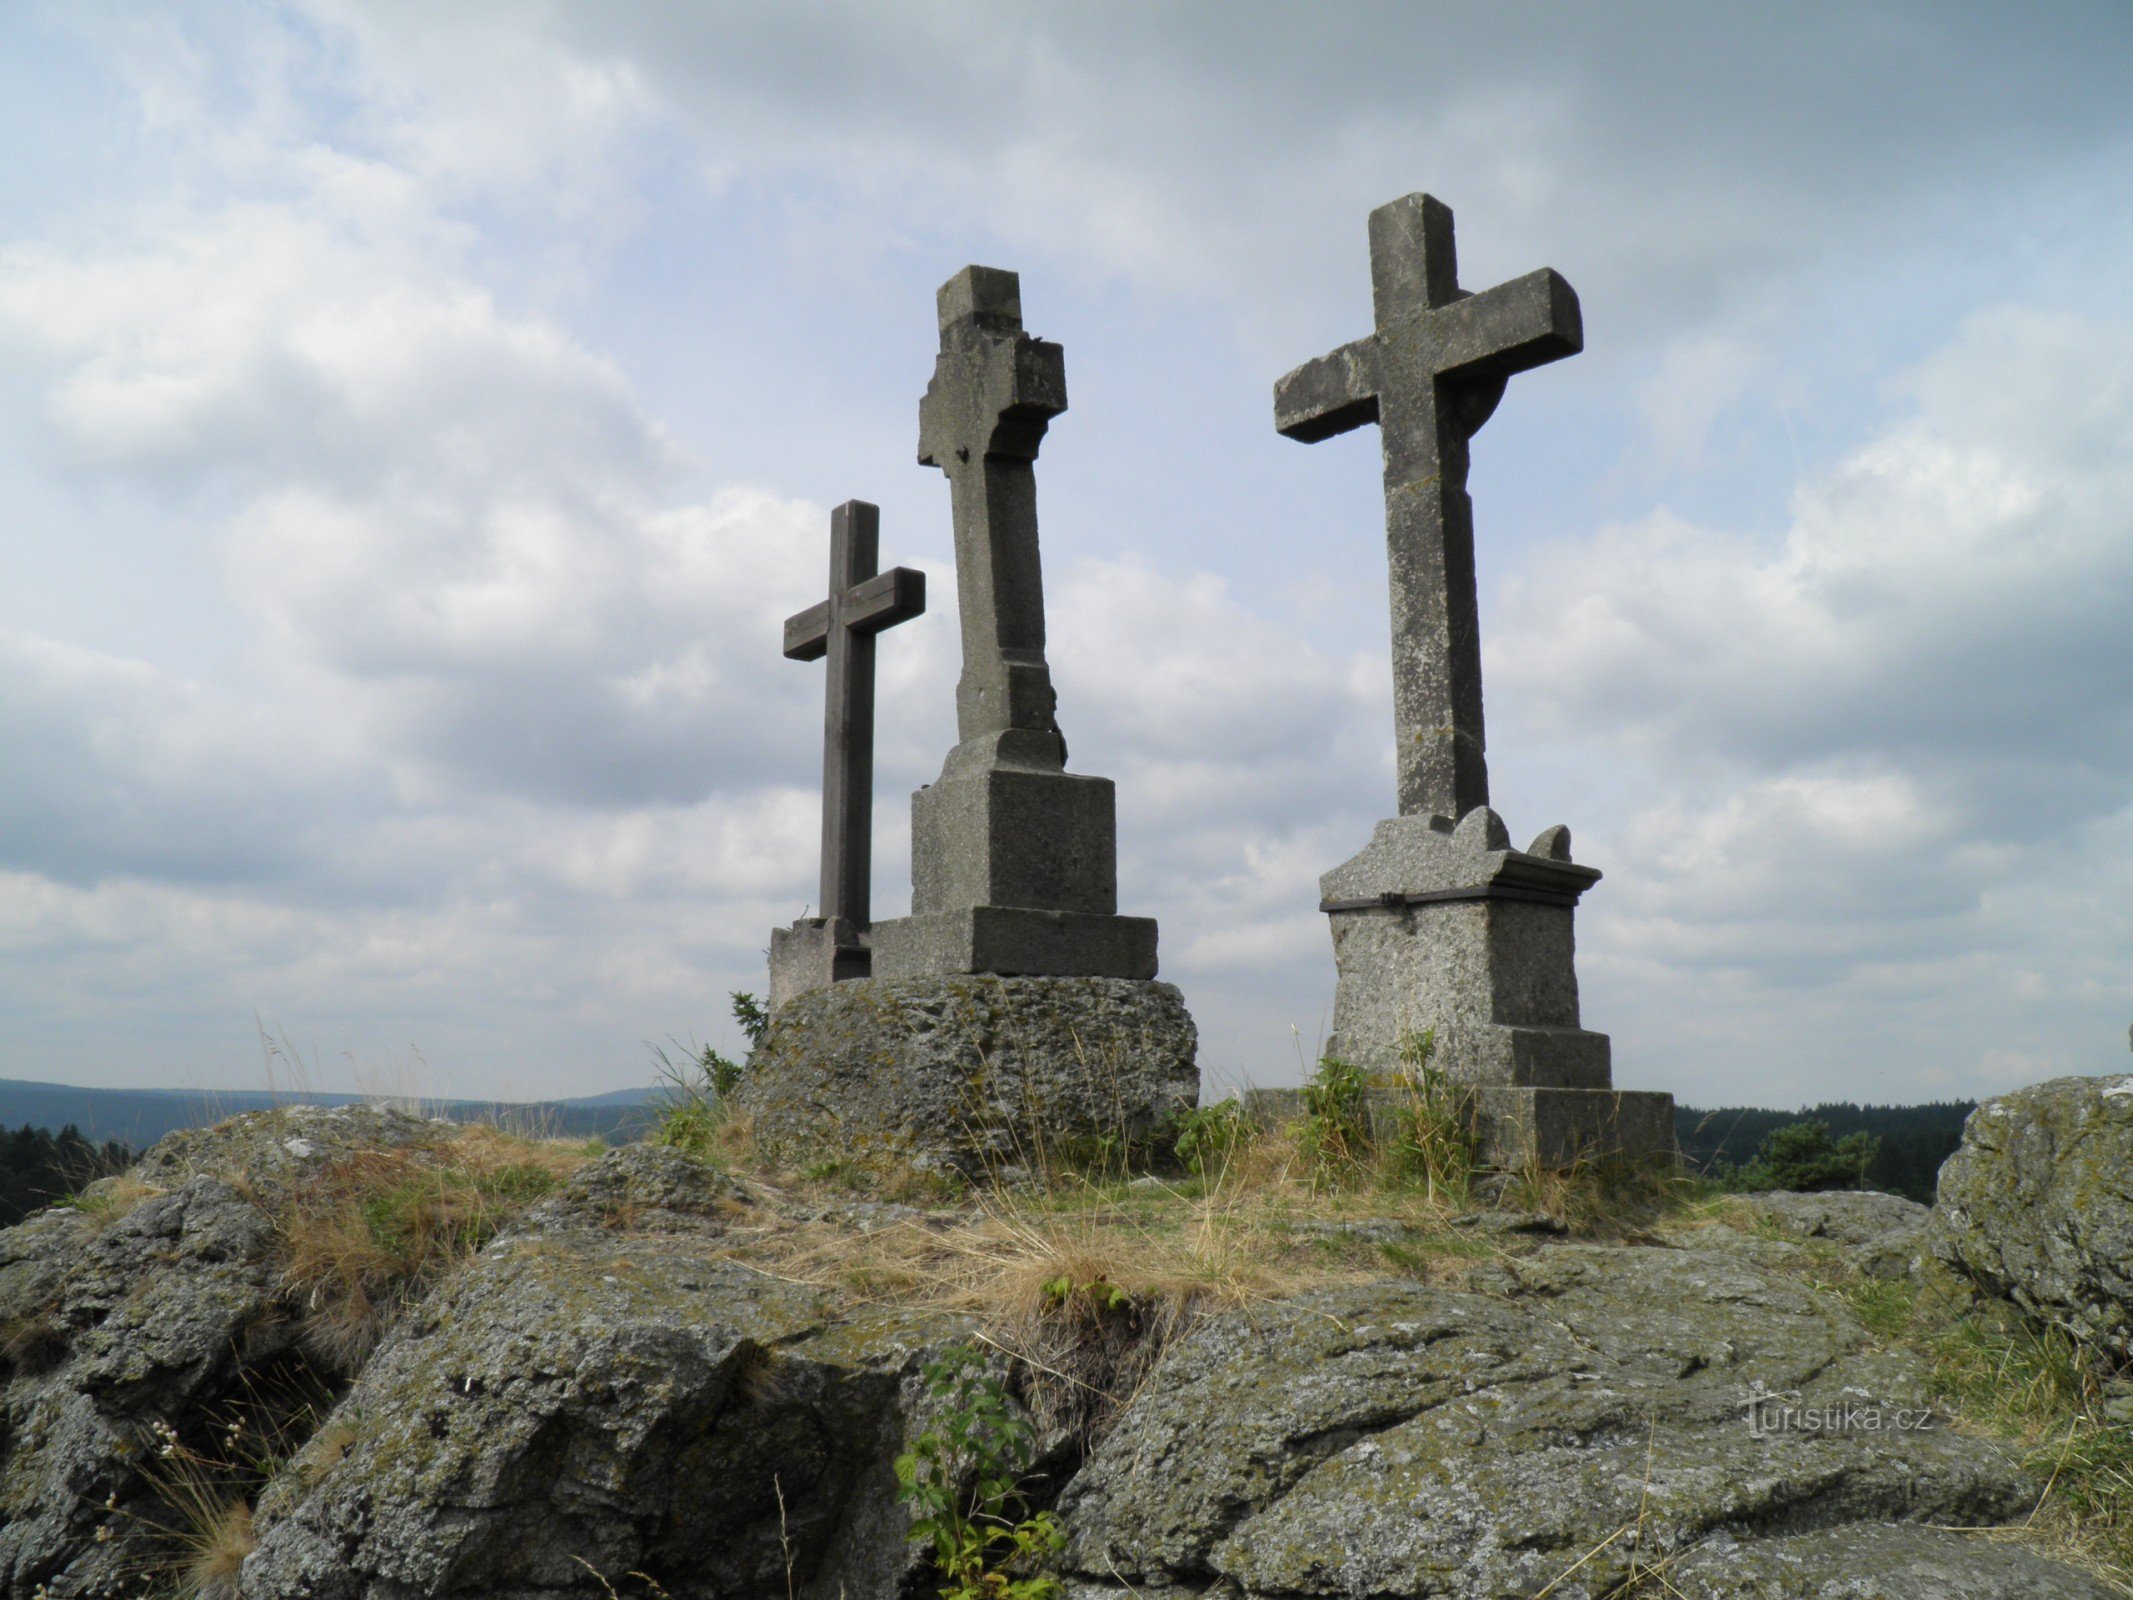 Drei Kreuze in der Nähe des Dorfes Prameny.